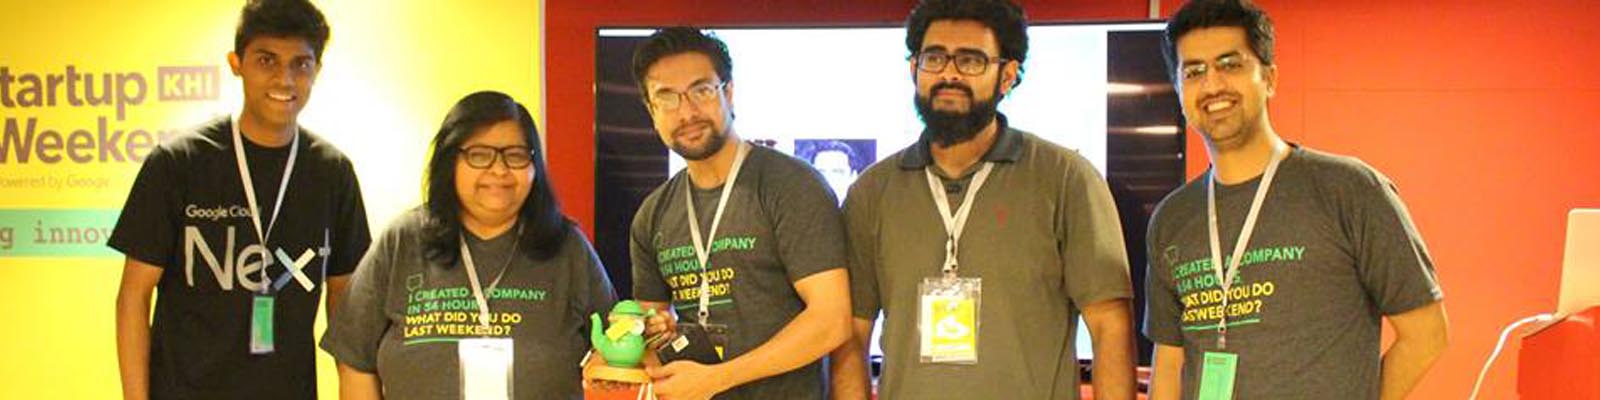 Google-powered ‘Startup Weekend’: energizing proud Pakistan drive